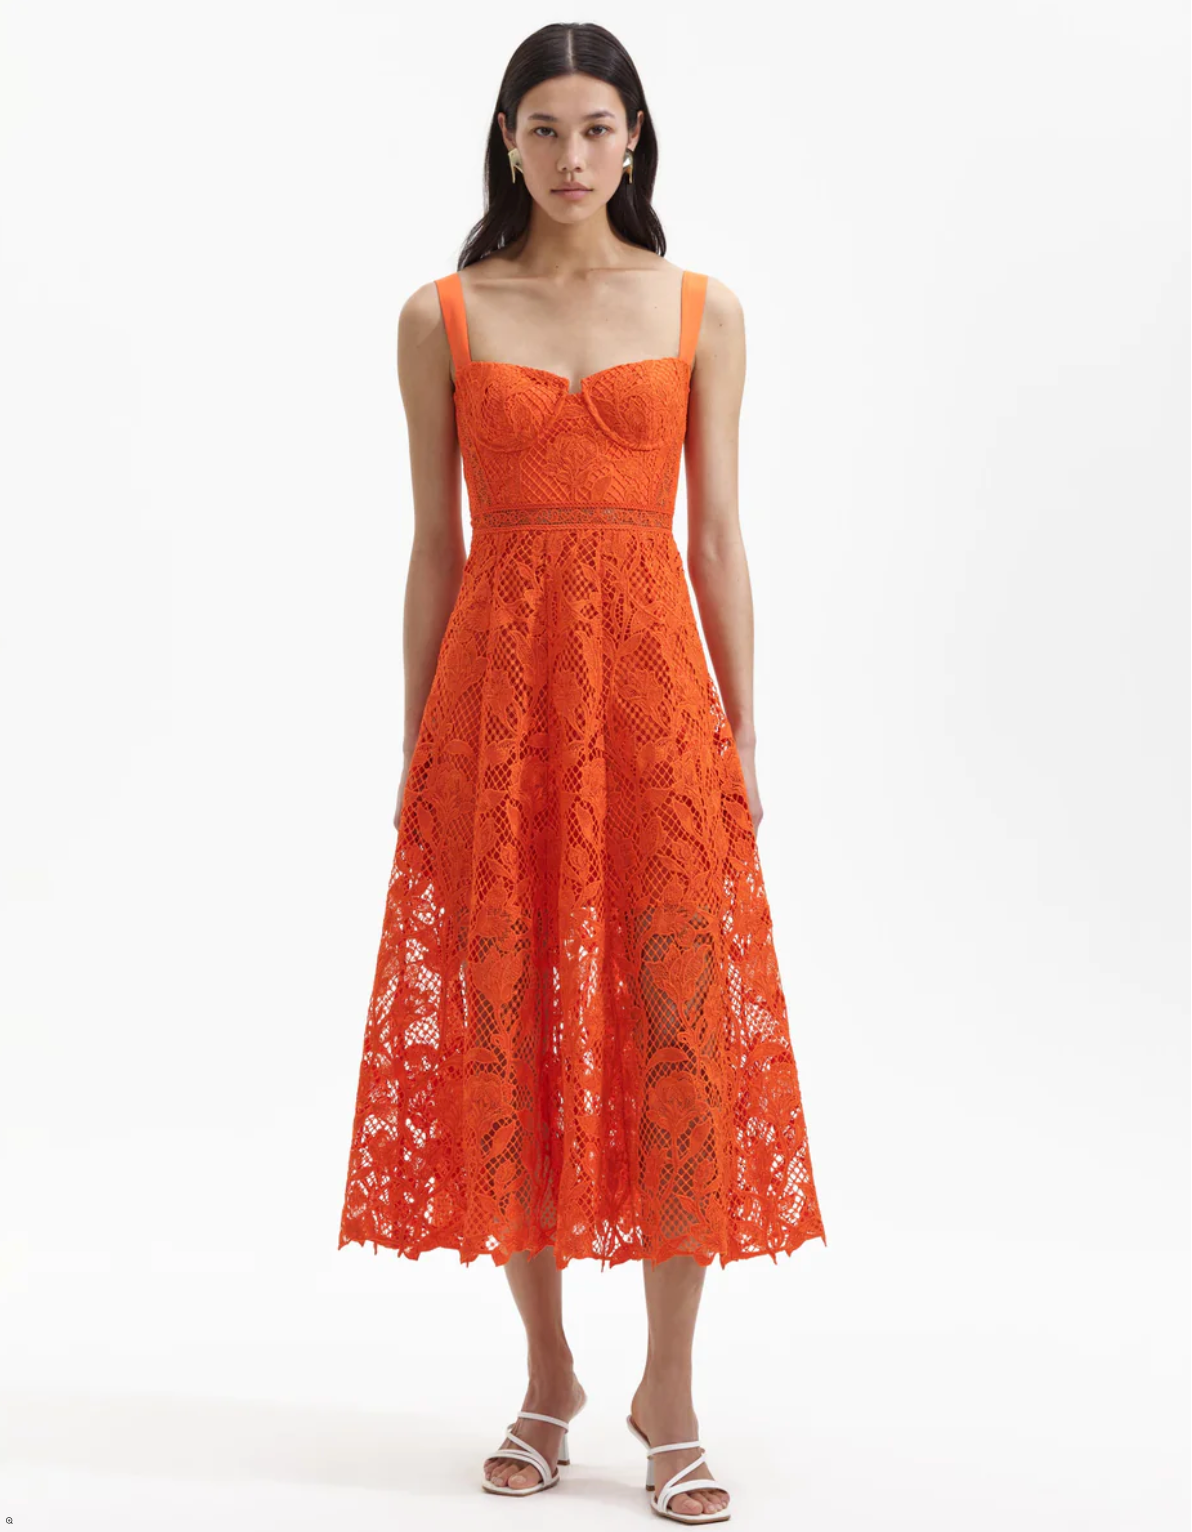 Orange dress with lace skirt